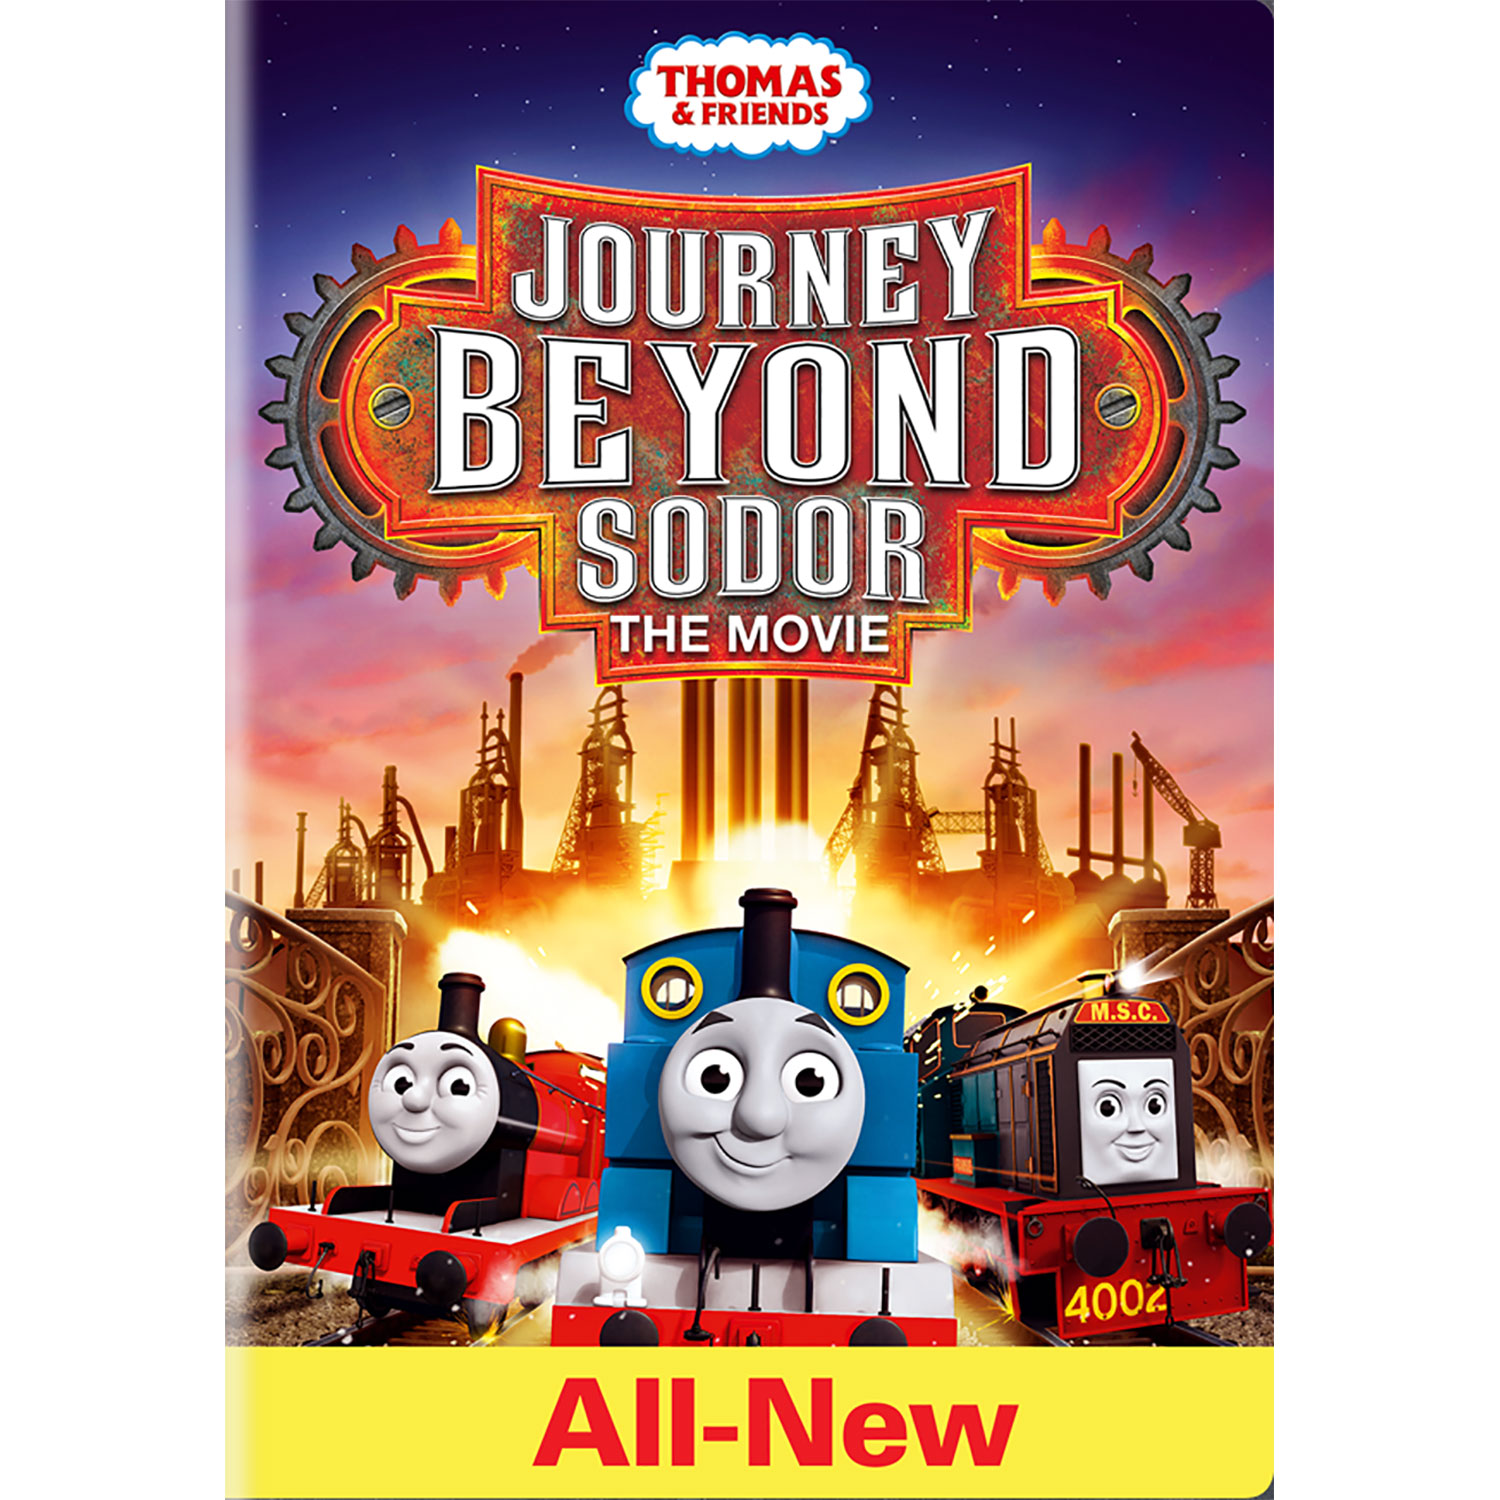 Thomas & Friends: Journey Beyond Sodor (English)